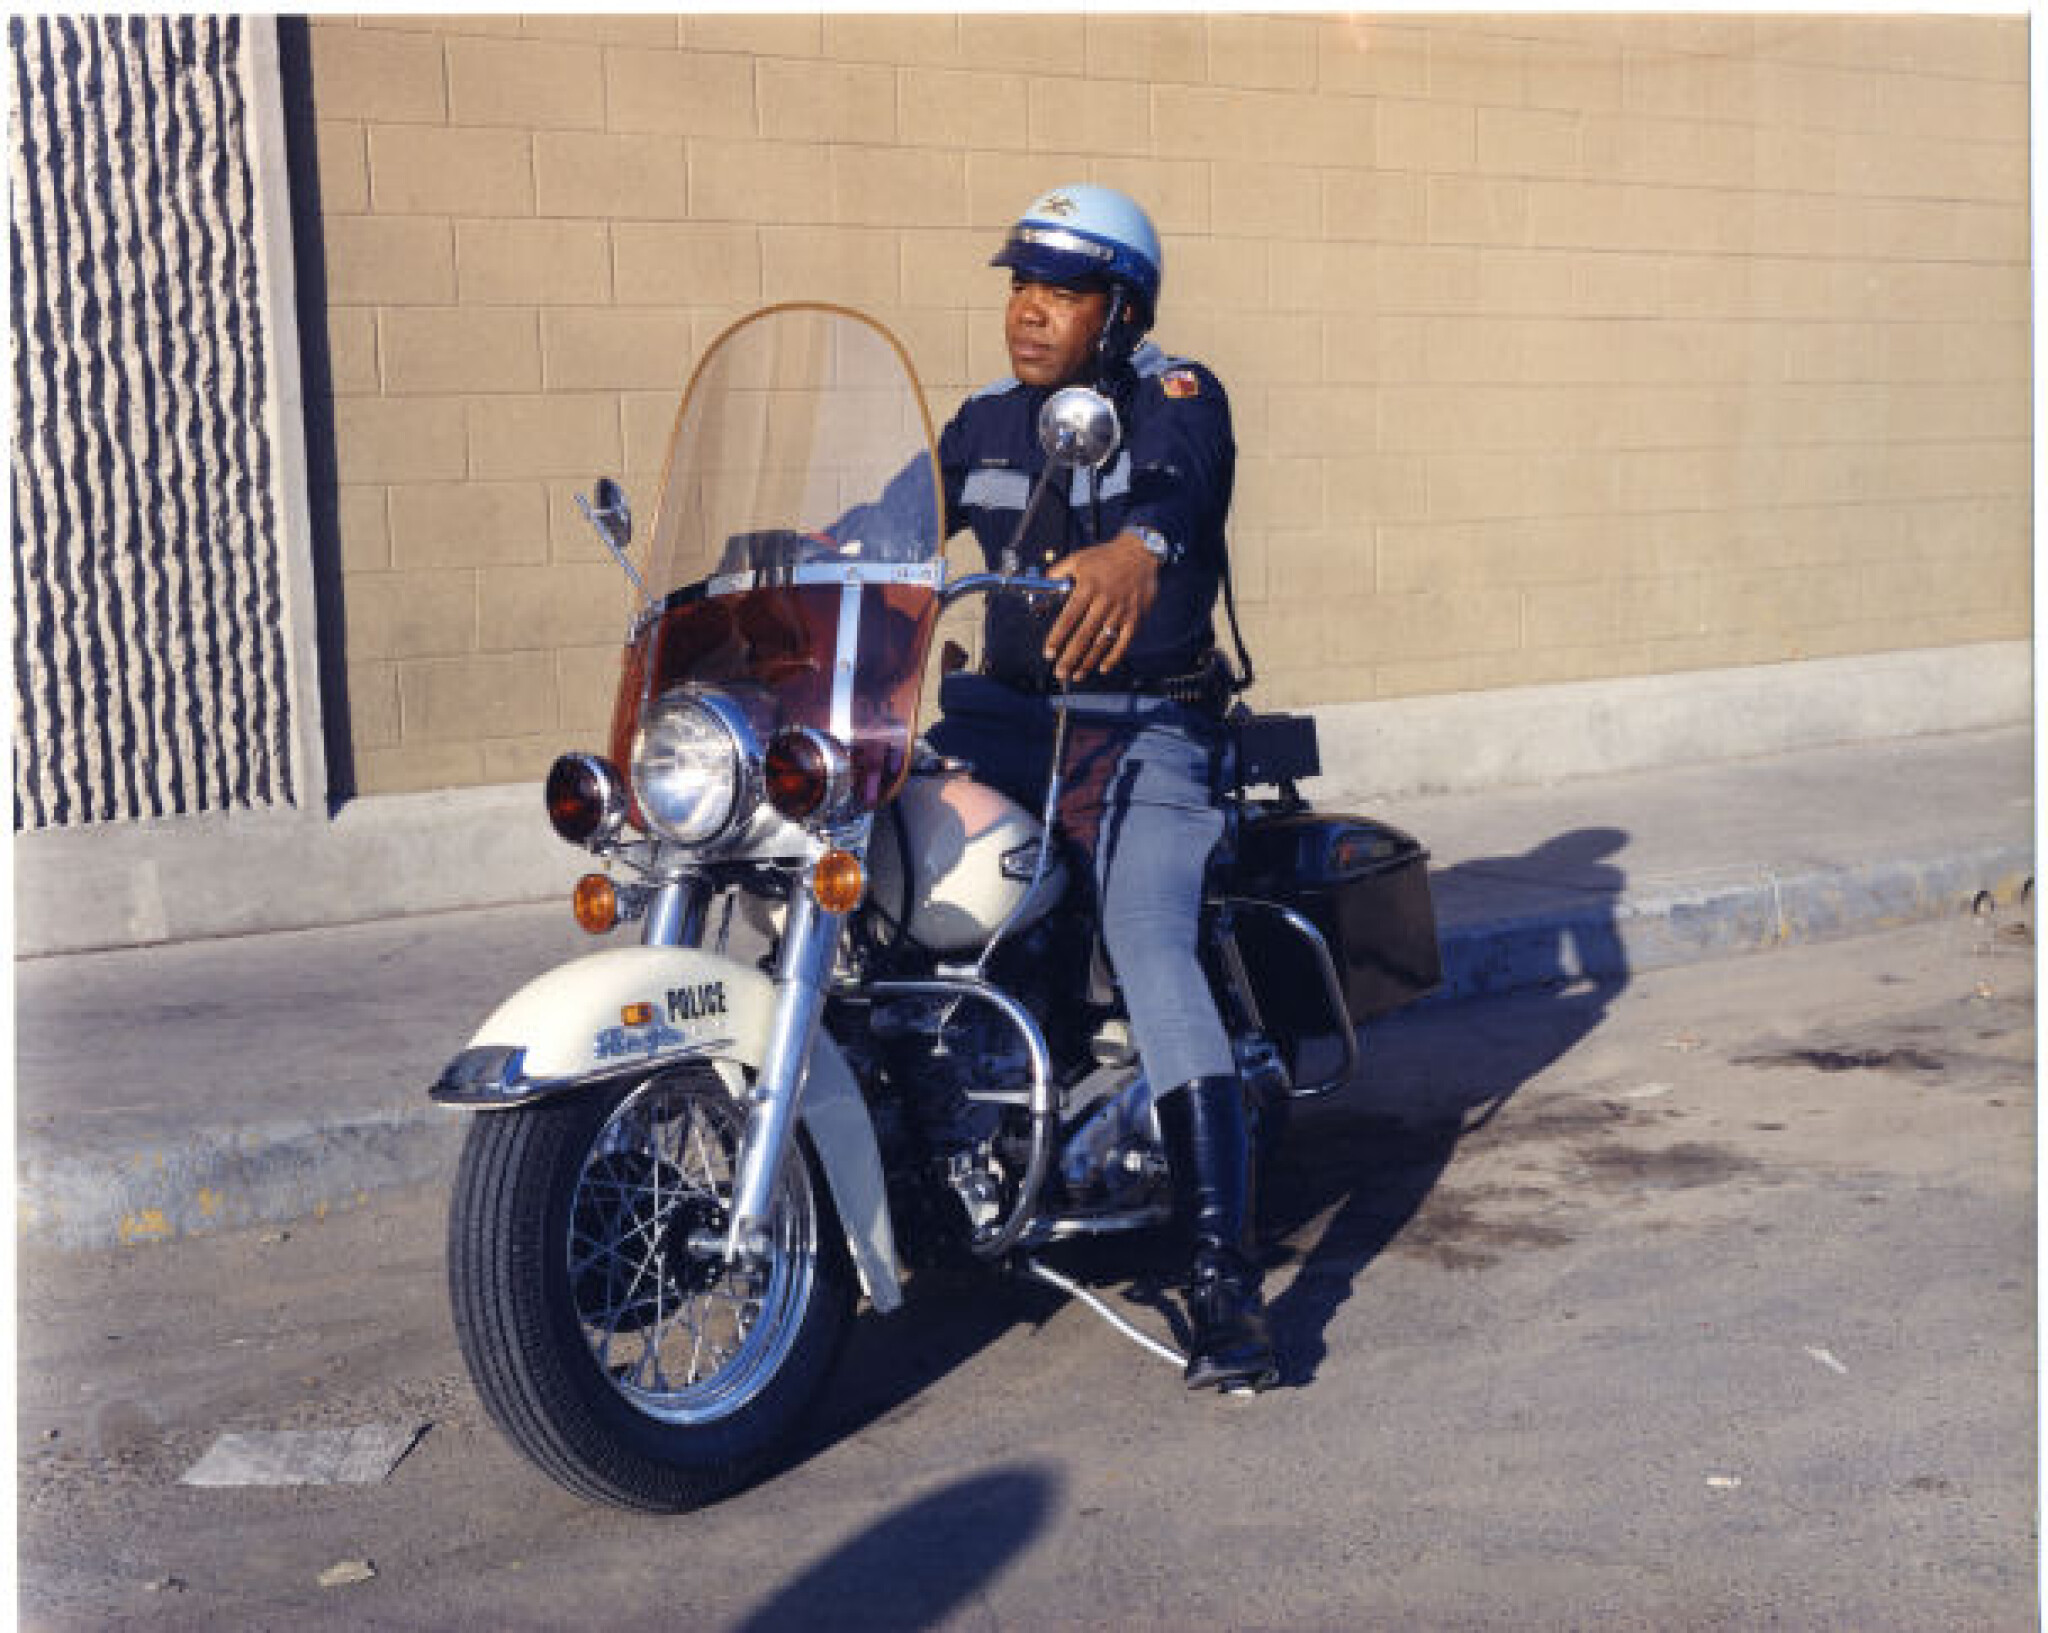 El Paso Police motorcycle officer -1970 - DIGIE